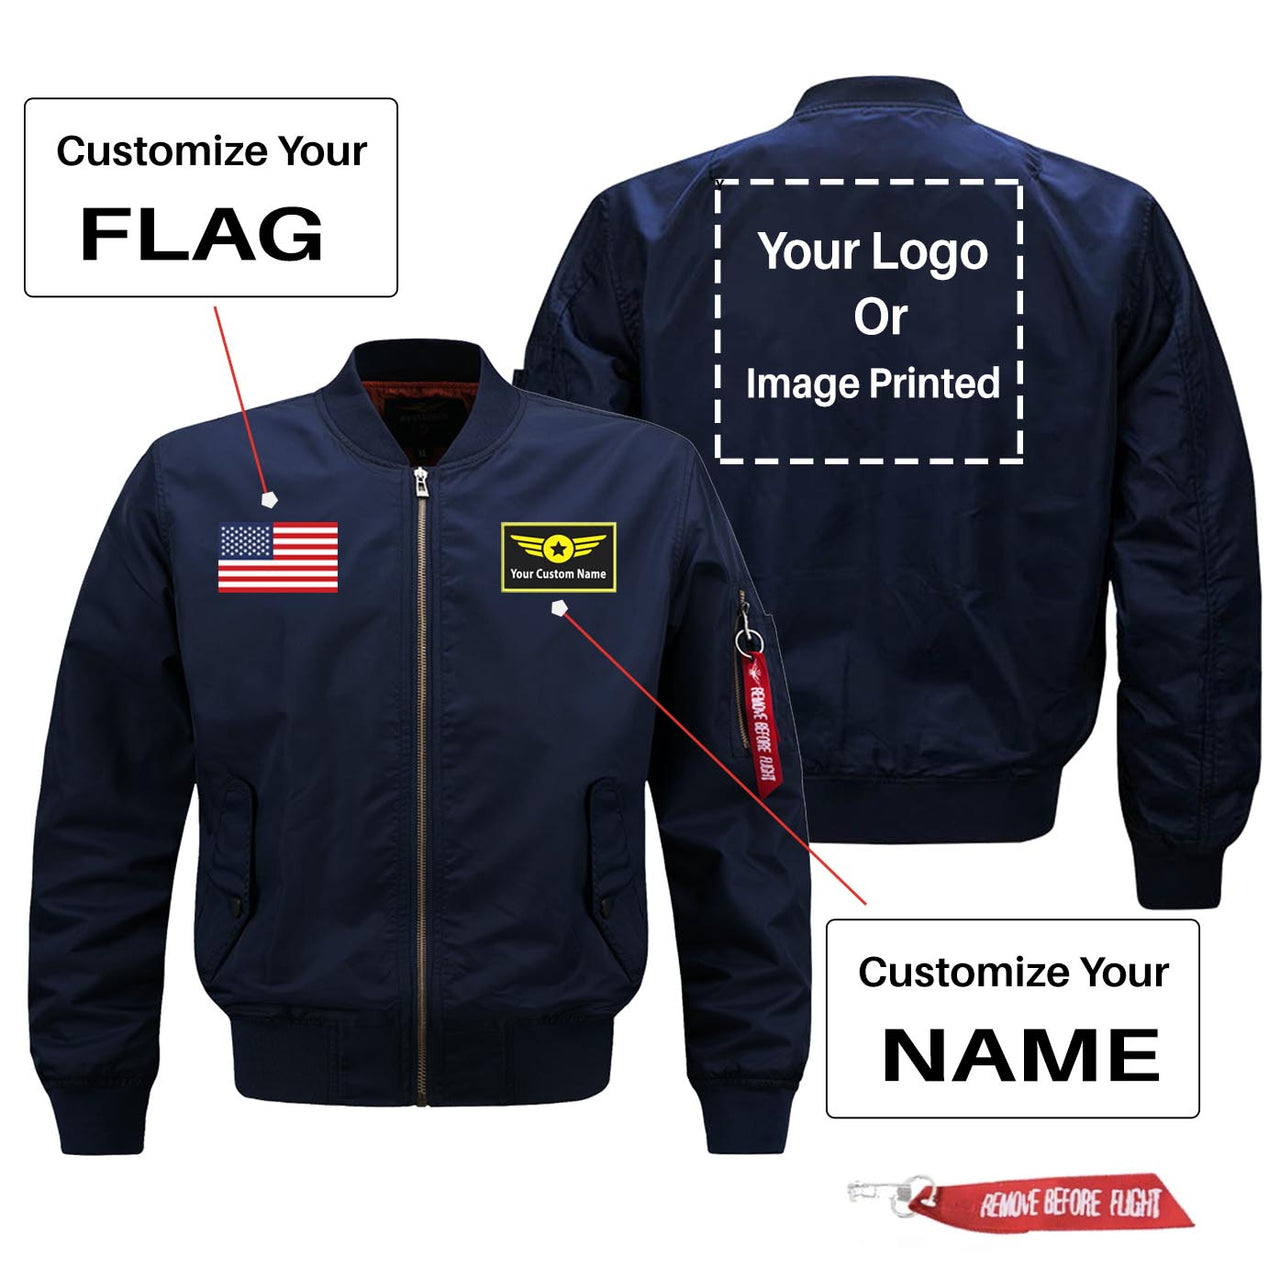 Custom Your Name & Flag & Logo (1) Designed Pilot Jackets